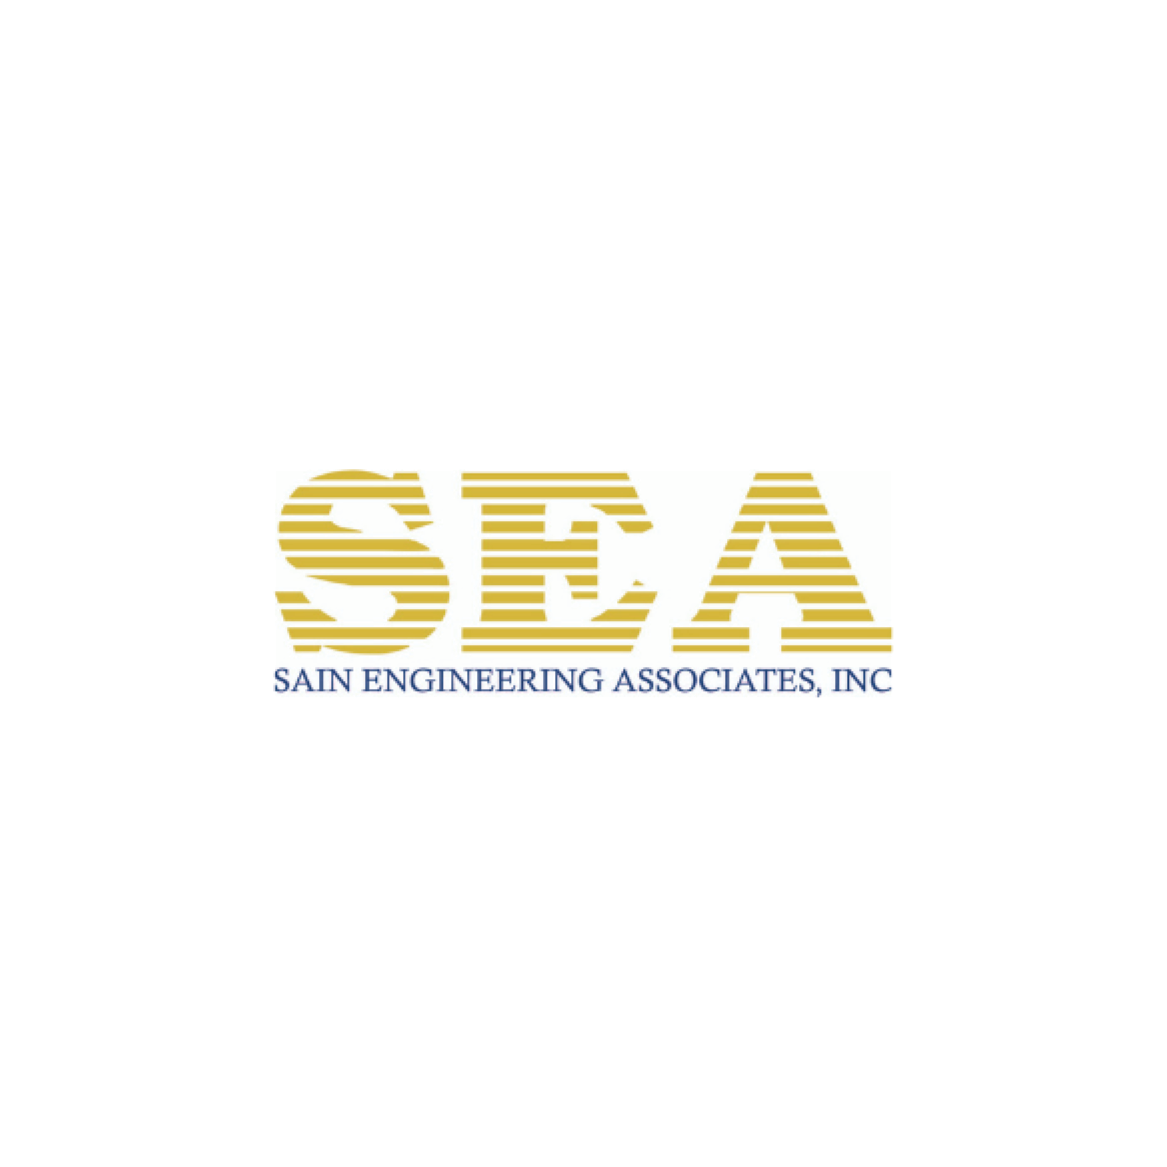 Sain Engineering Associates